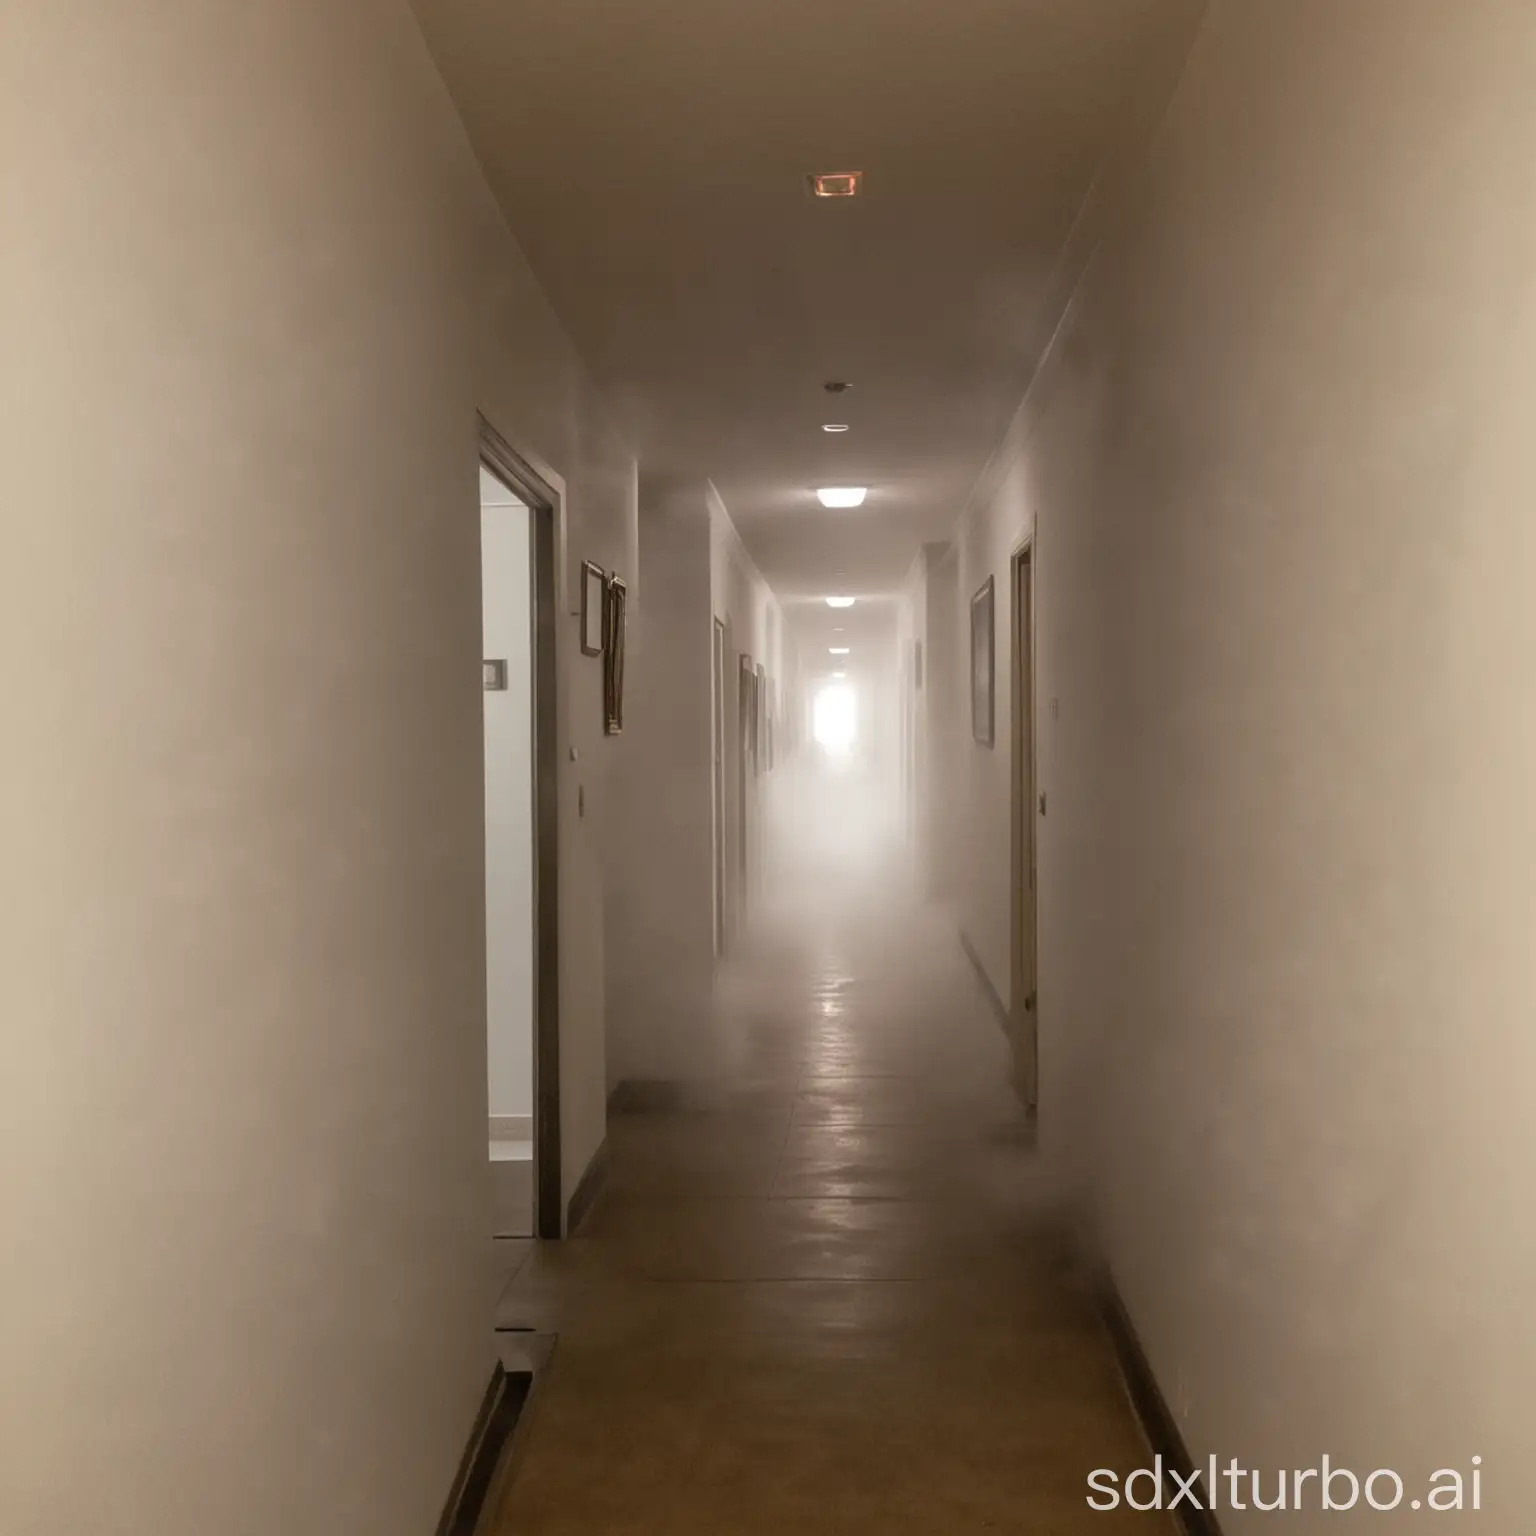 SmokeFilled-Hallway-Dense-Fog-Envelops-the-Corridor